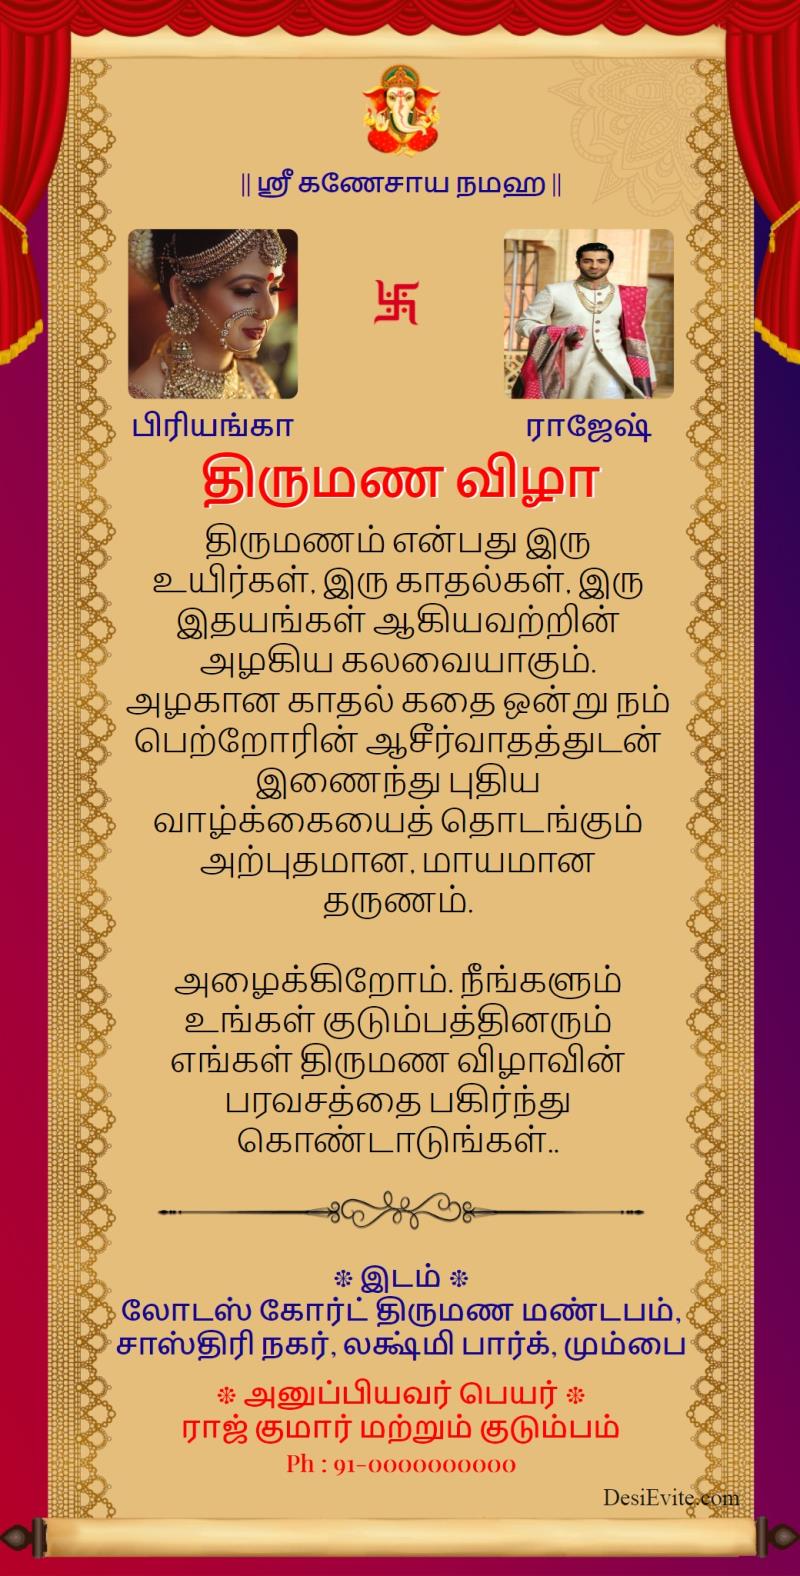 Tamil ancient letter khalita wedding invitation card template 162 105